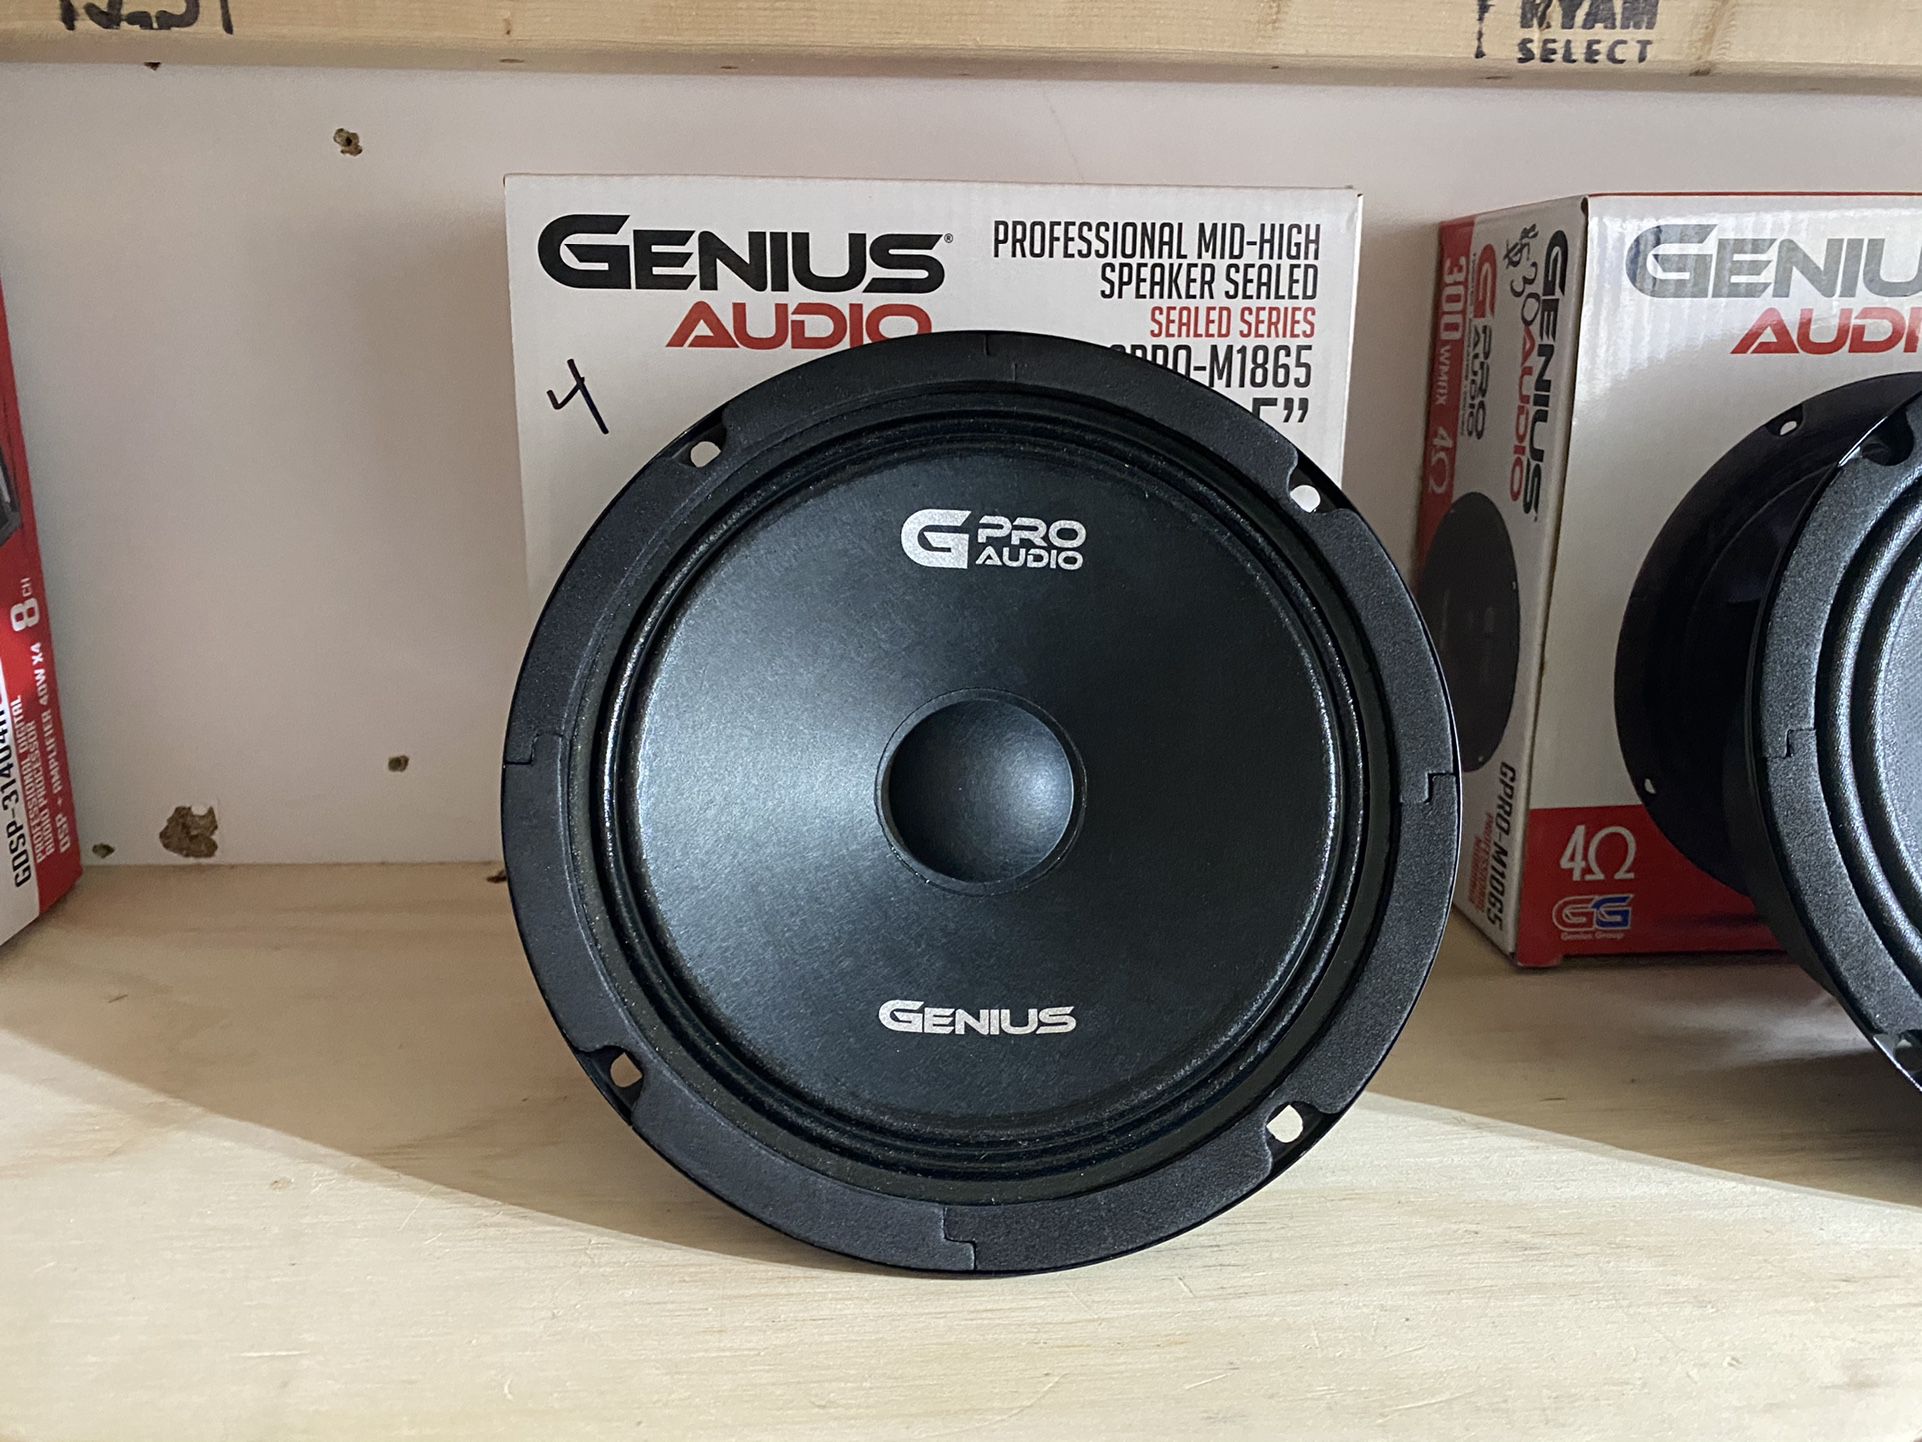 New 6.5" Genius Audio Sealed Back High Frequency Midrange Speaker $30 Each 